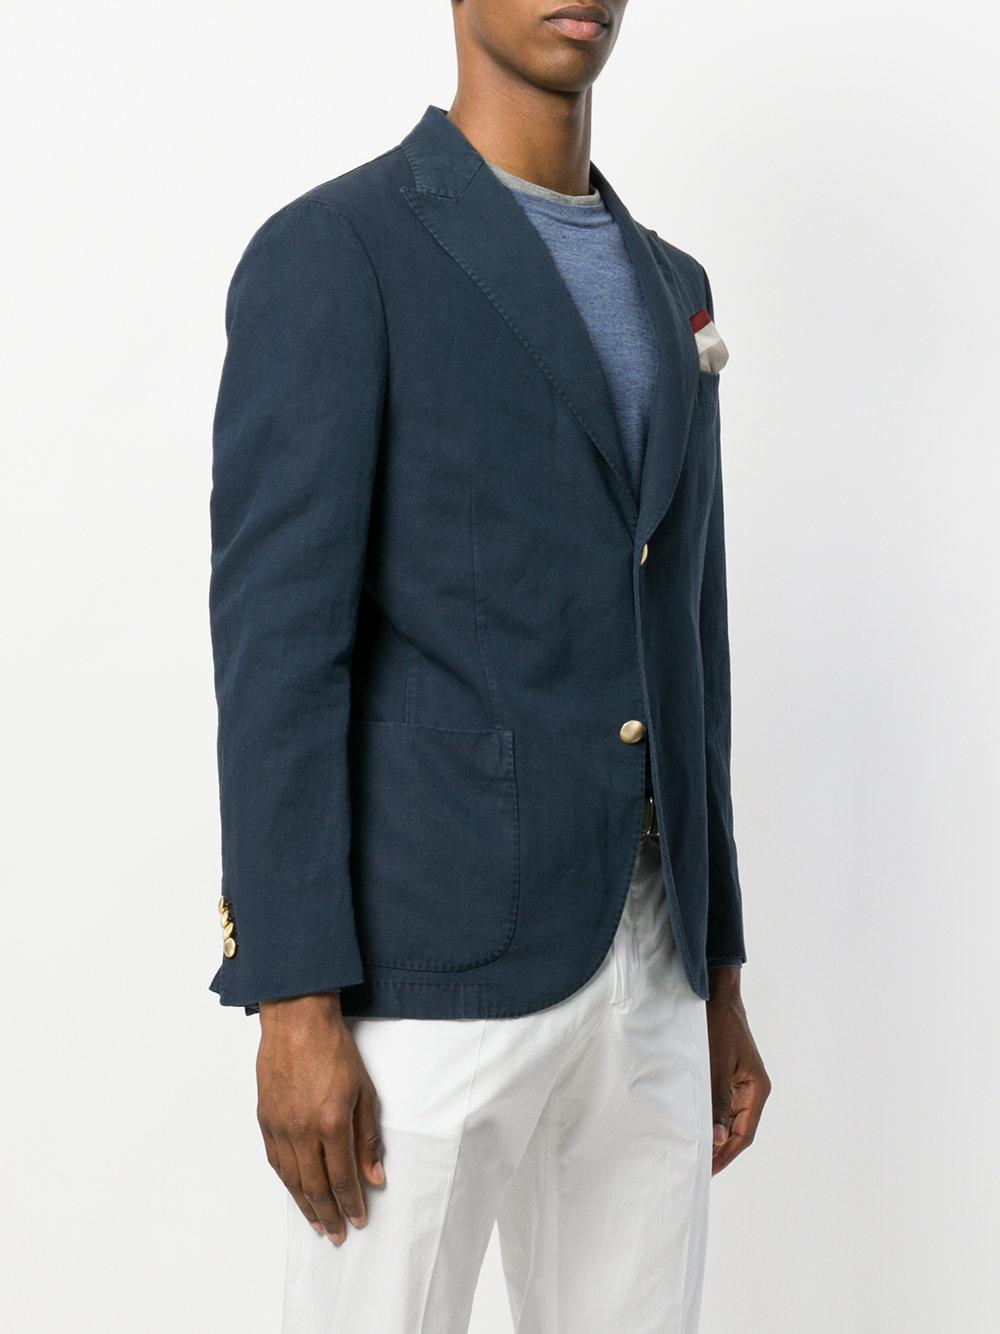 Boglioli Cotton Special Occasion Jacket in Blue for Men - Lyst